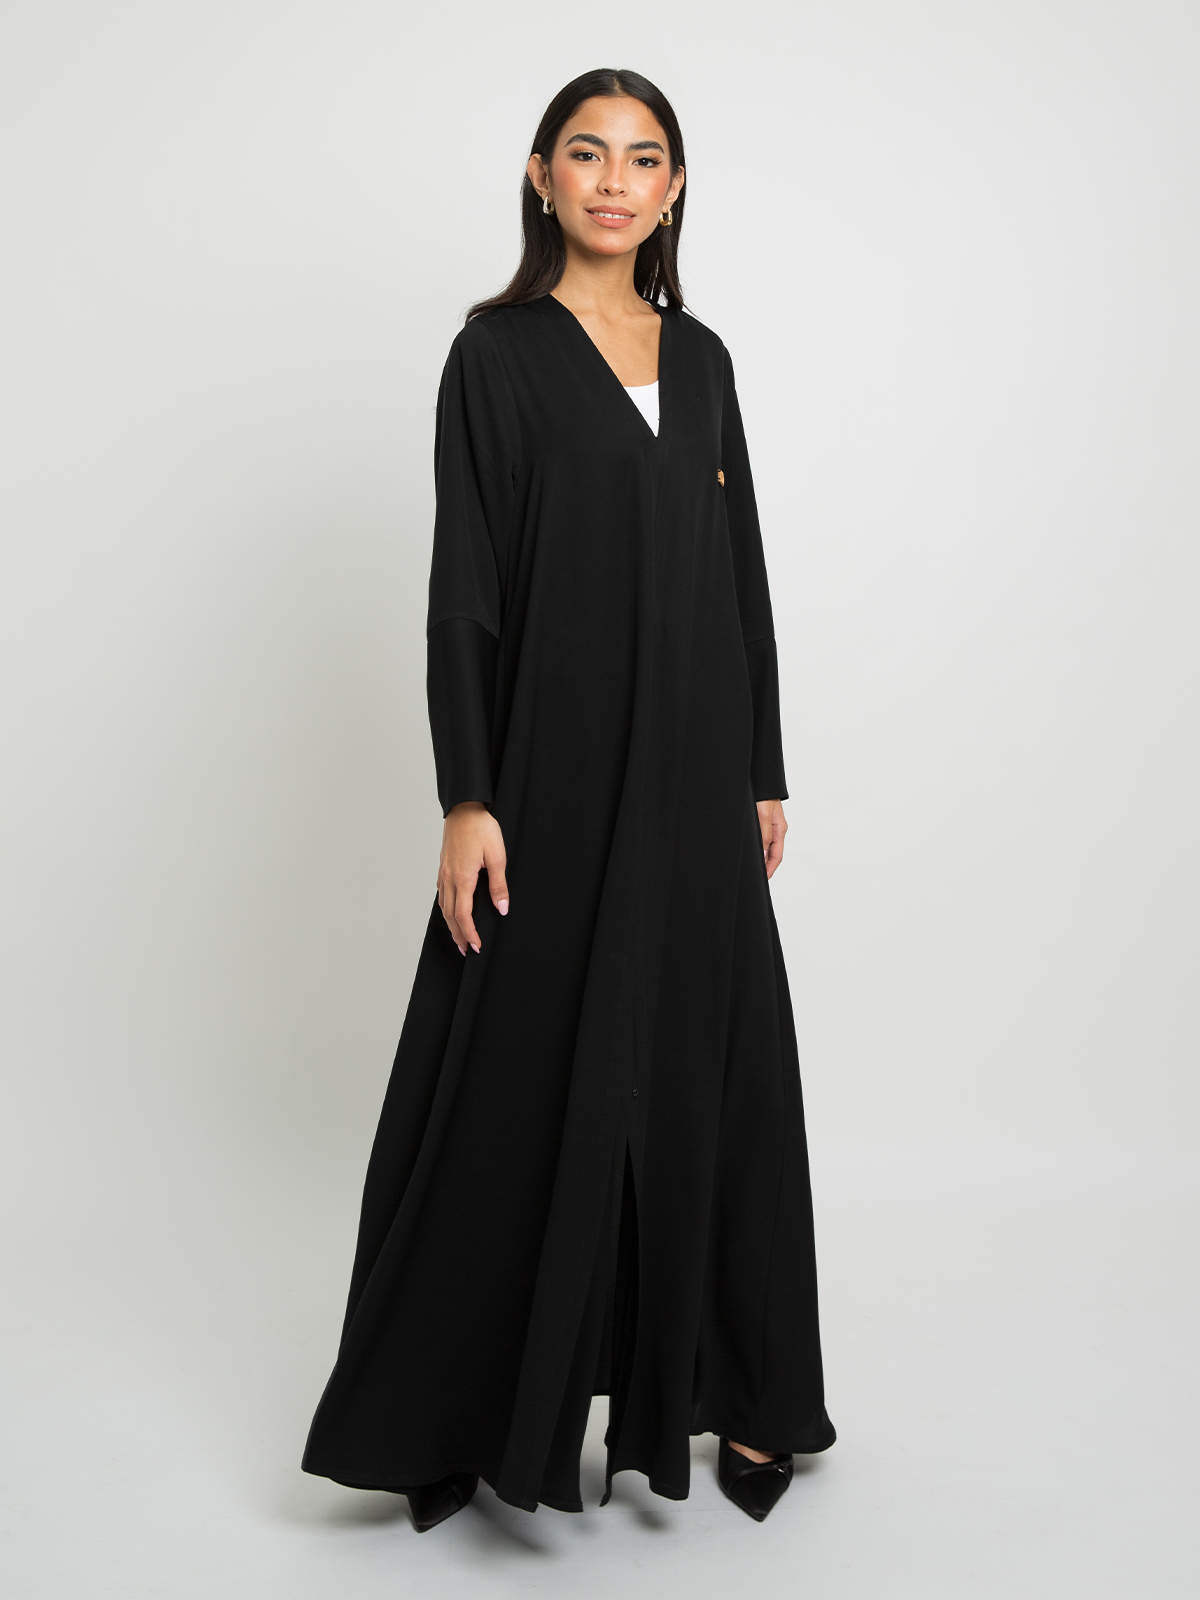 Black - A Cut Half Cloche Closed Front Abaya in Crepe Fabric